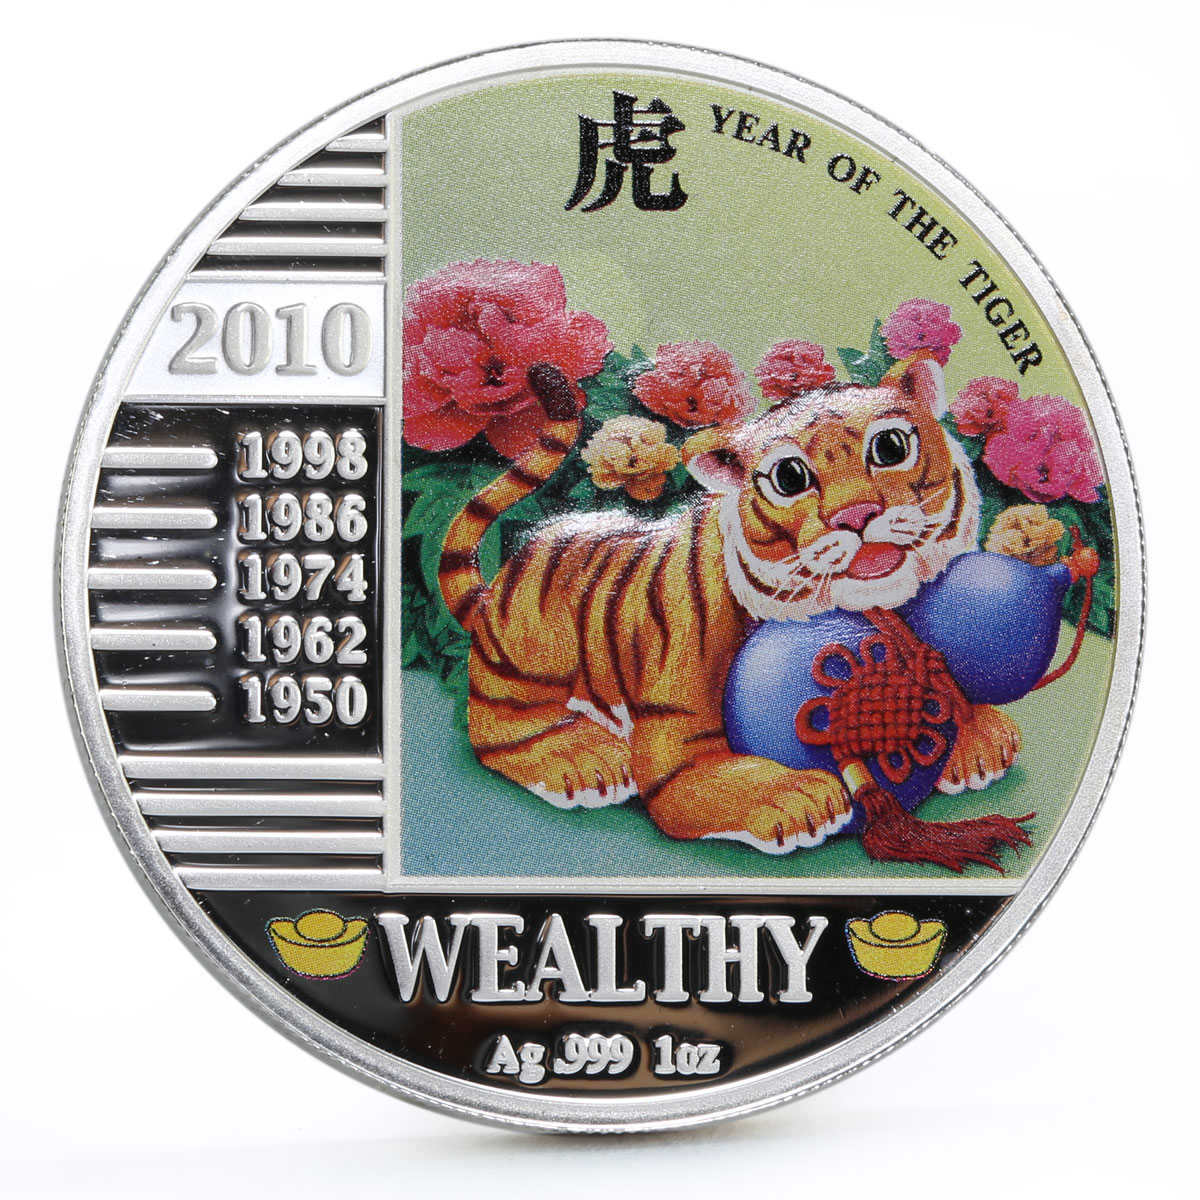 Malawi 20 kwacha Lunar Calendar series Year of the Wealth Tiger silver coin 2010